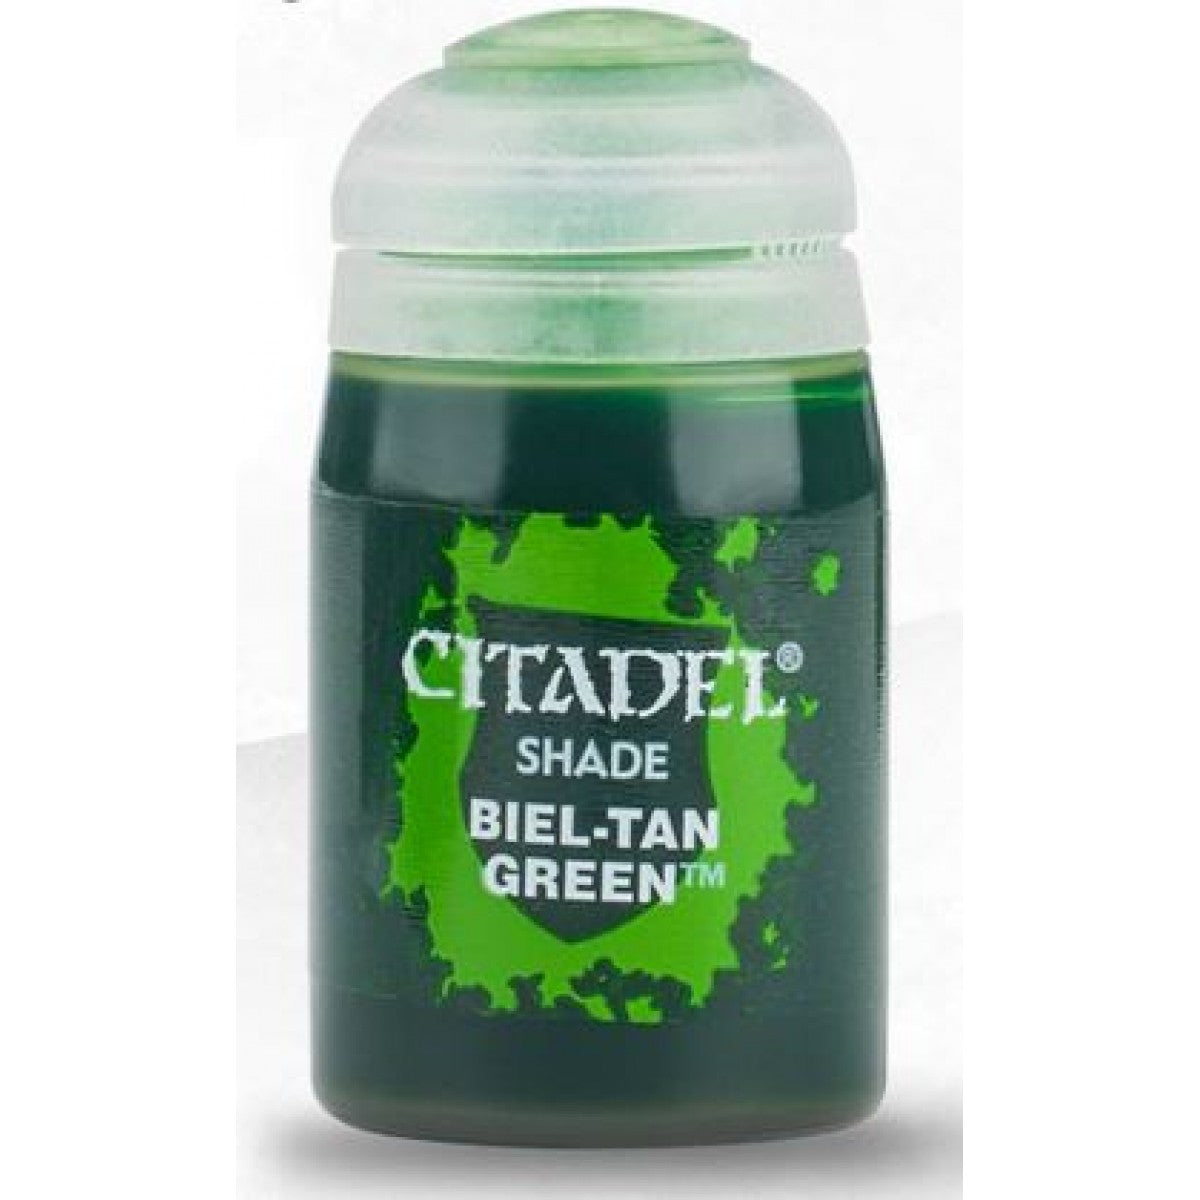 Shade Biel-Tan Green